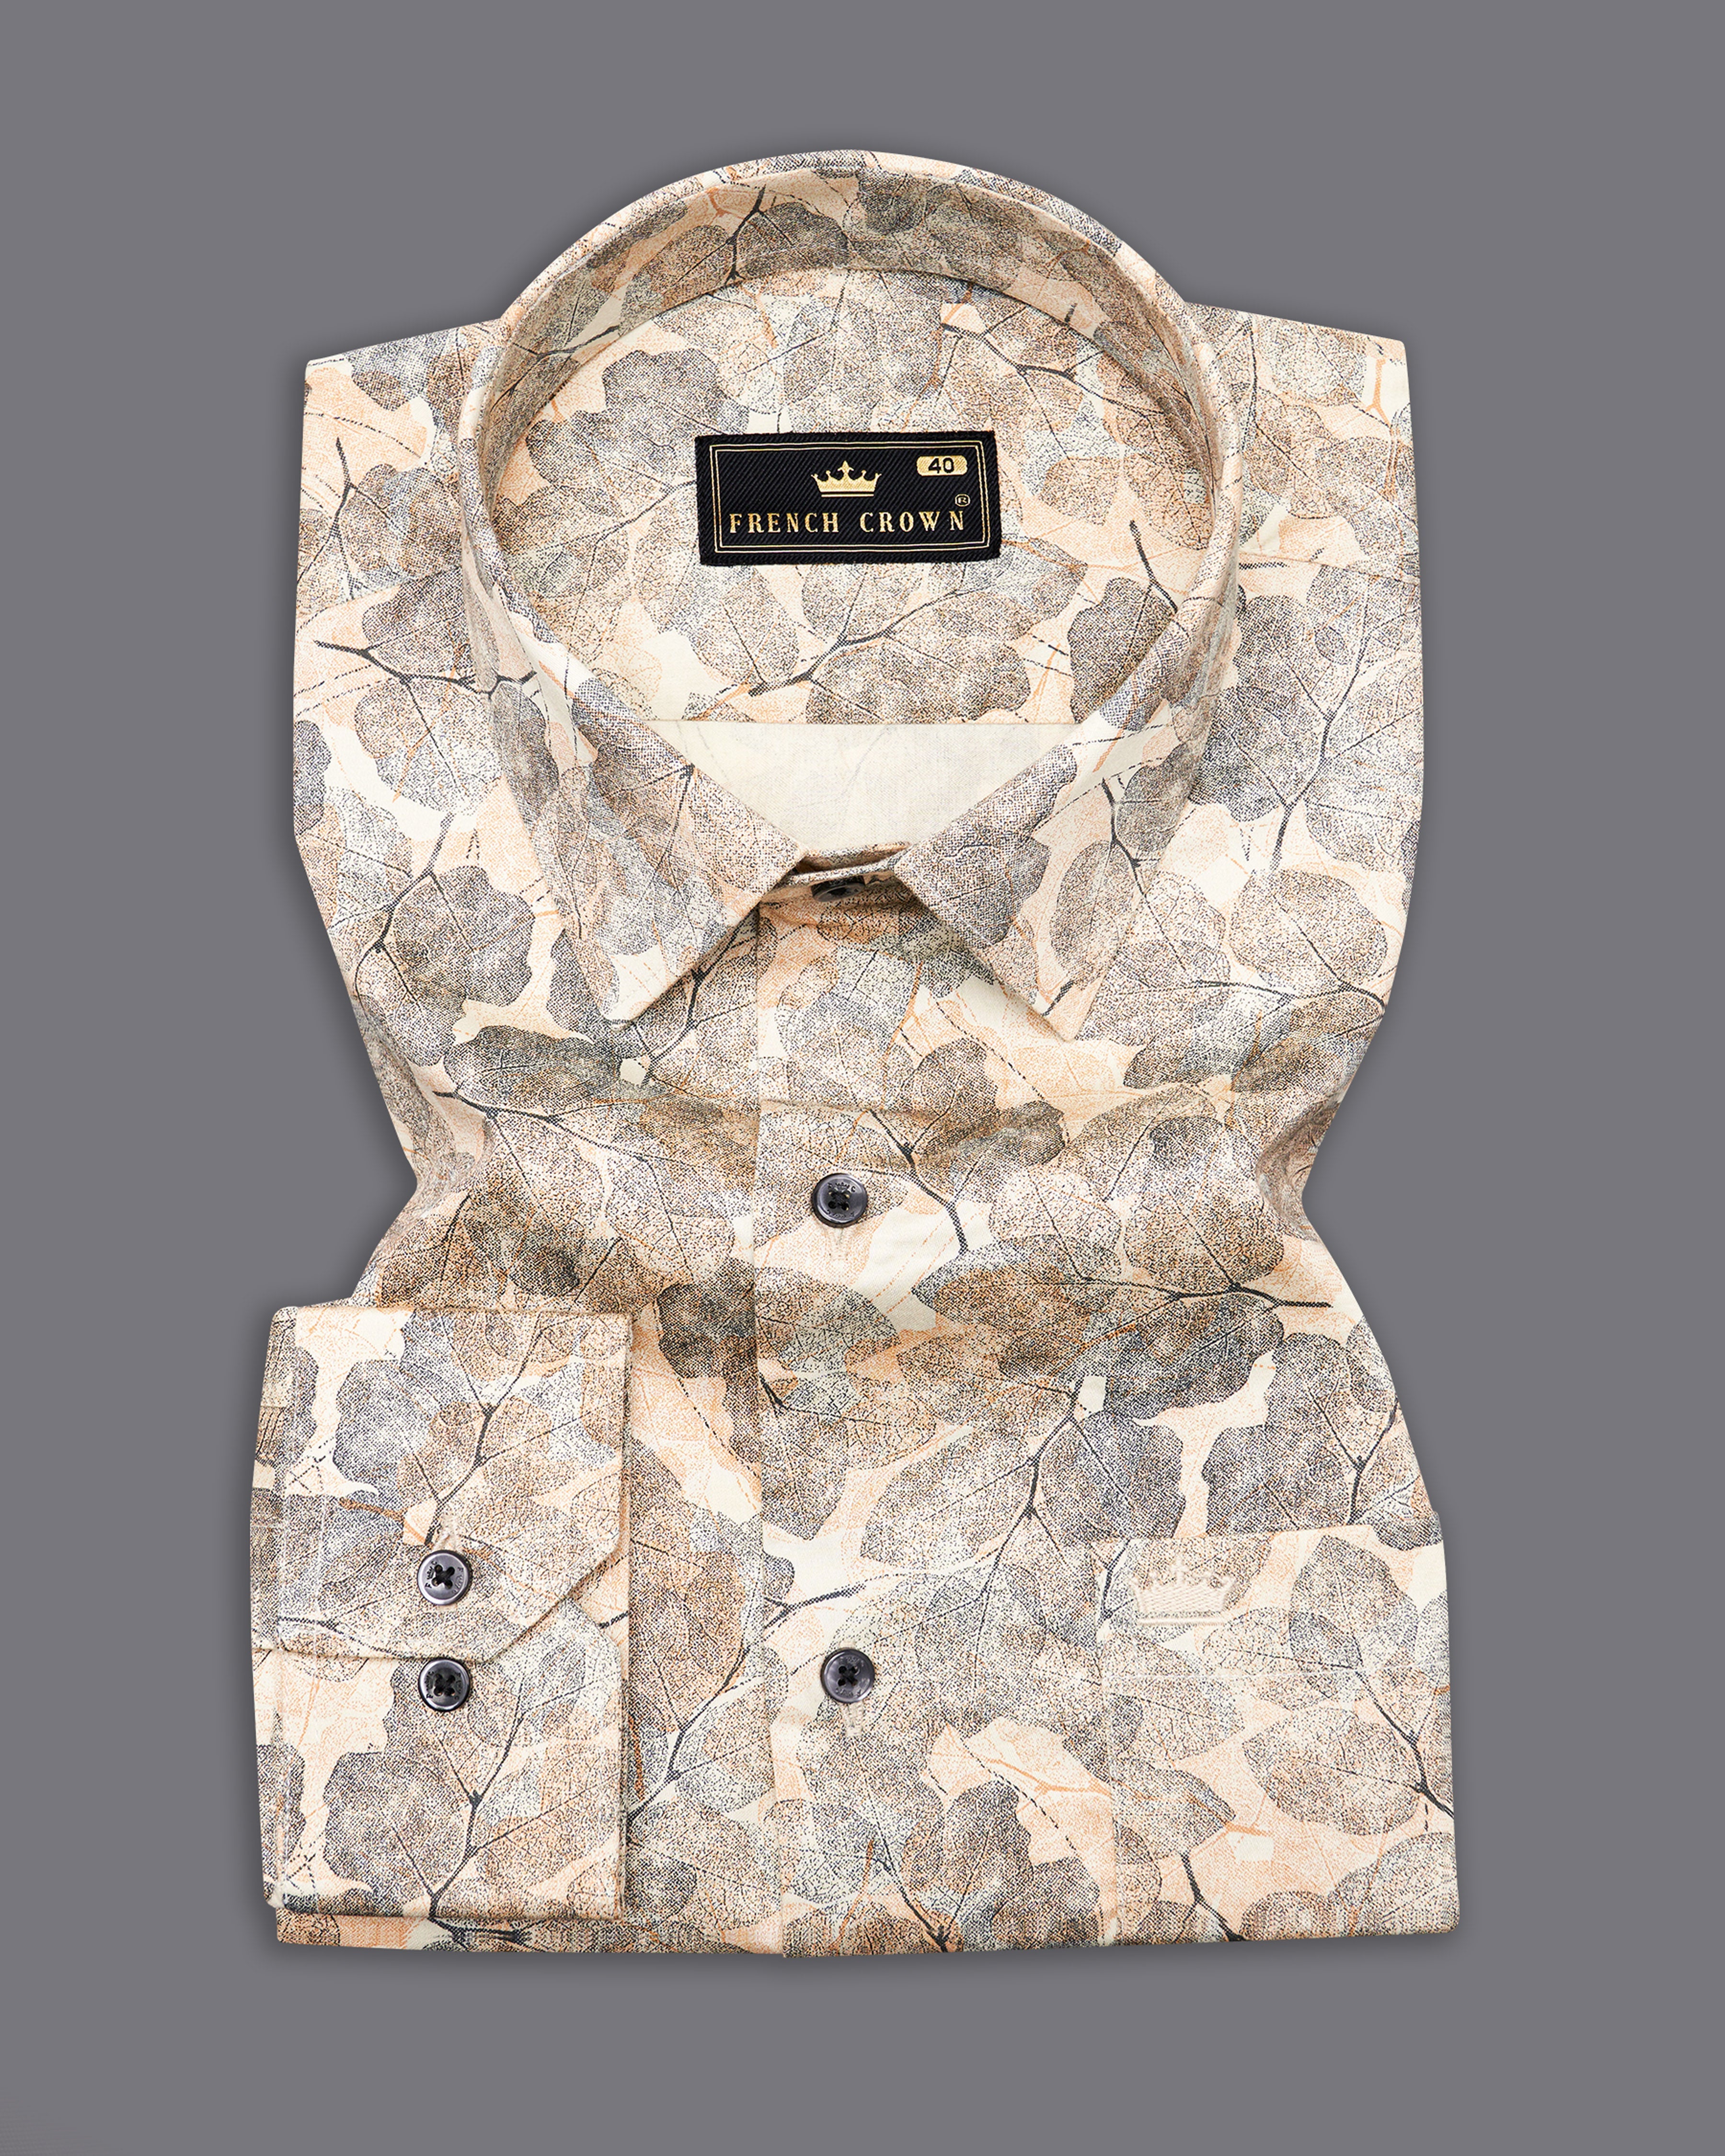 Soft Amber Beige With Leaves Printed Super Soft Premium Cotton Shirt 9690-BLK-38, 9690-BLK-H-38, 9690-BLK-39, 9690-BLK-H-39, 9690-BLK-40, 9690-BLK-H-40, 9690-BLK-42, 9690-BLK-H-42, 9690-BLK-44, 9690-BLK-H-44, 9690-BLK-46, 9690-BLK-H-46, 9690-BLK-48, 9690-BLK-H-48, 9690-BLK-50, 9690-BLK-H-50, 9690-BLK-52, 9690-BLK-H-52